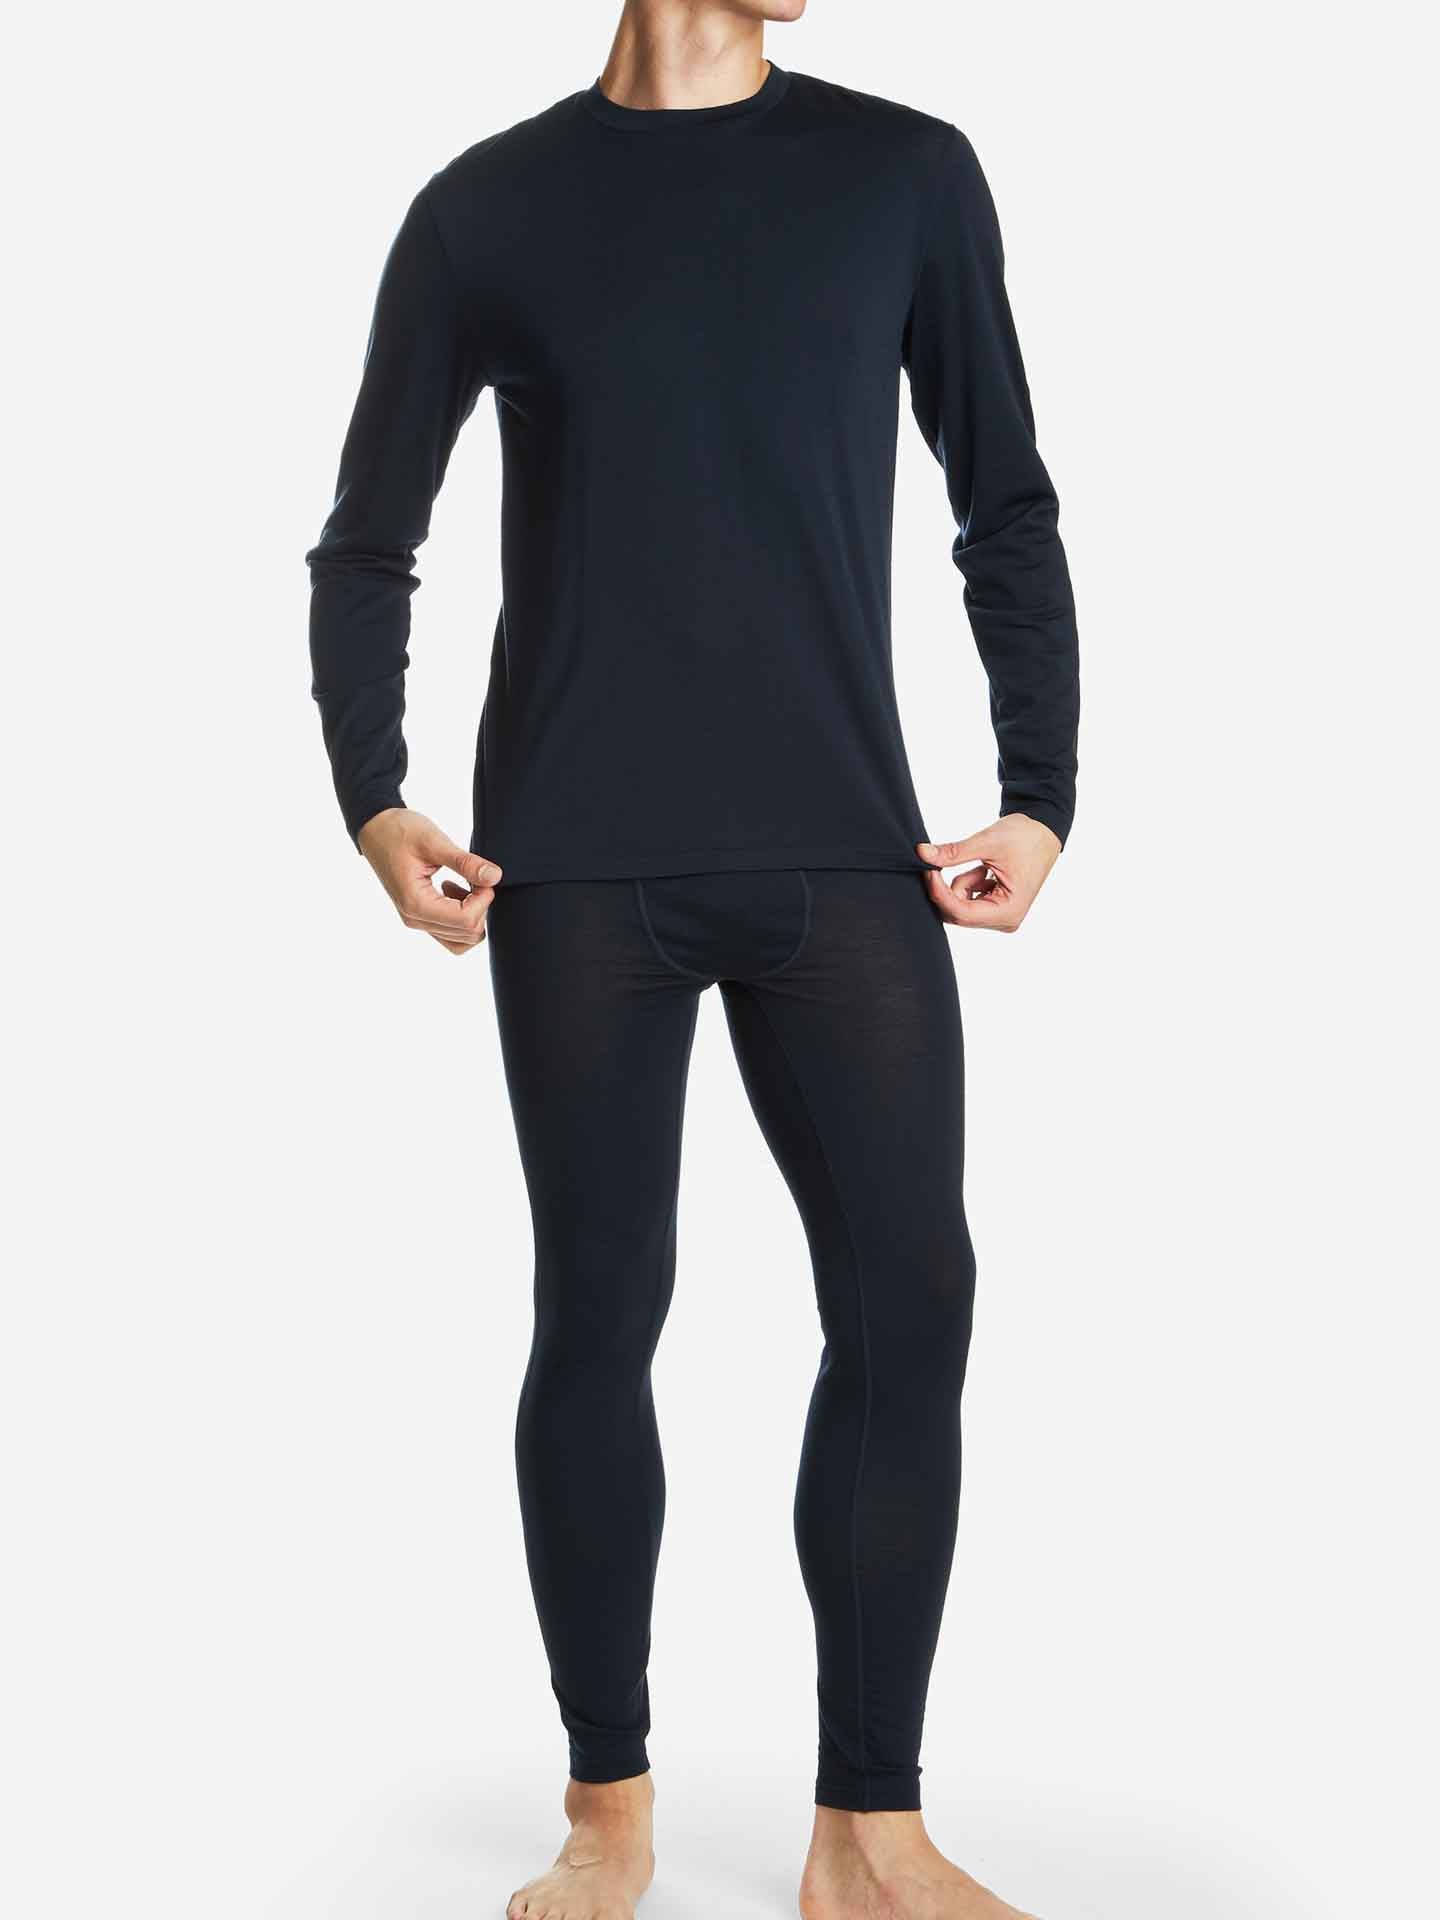 Natural Merino Wool Leggings for Men - Winter Long Johns - Thermal  Underwear